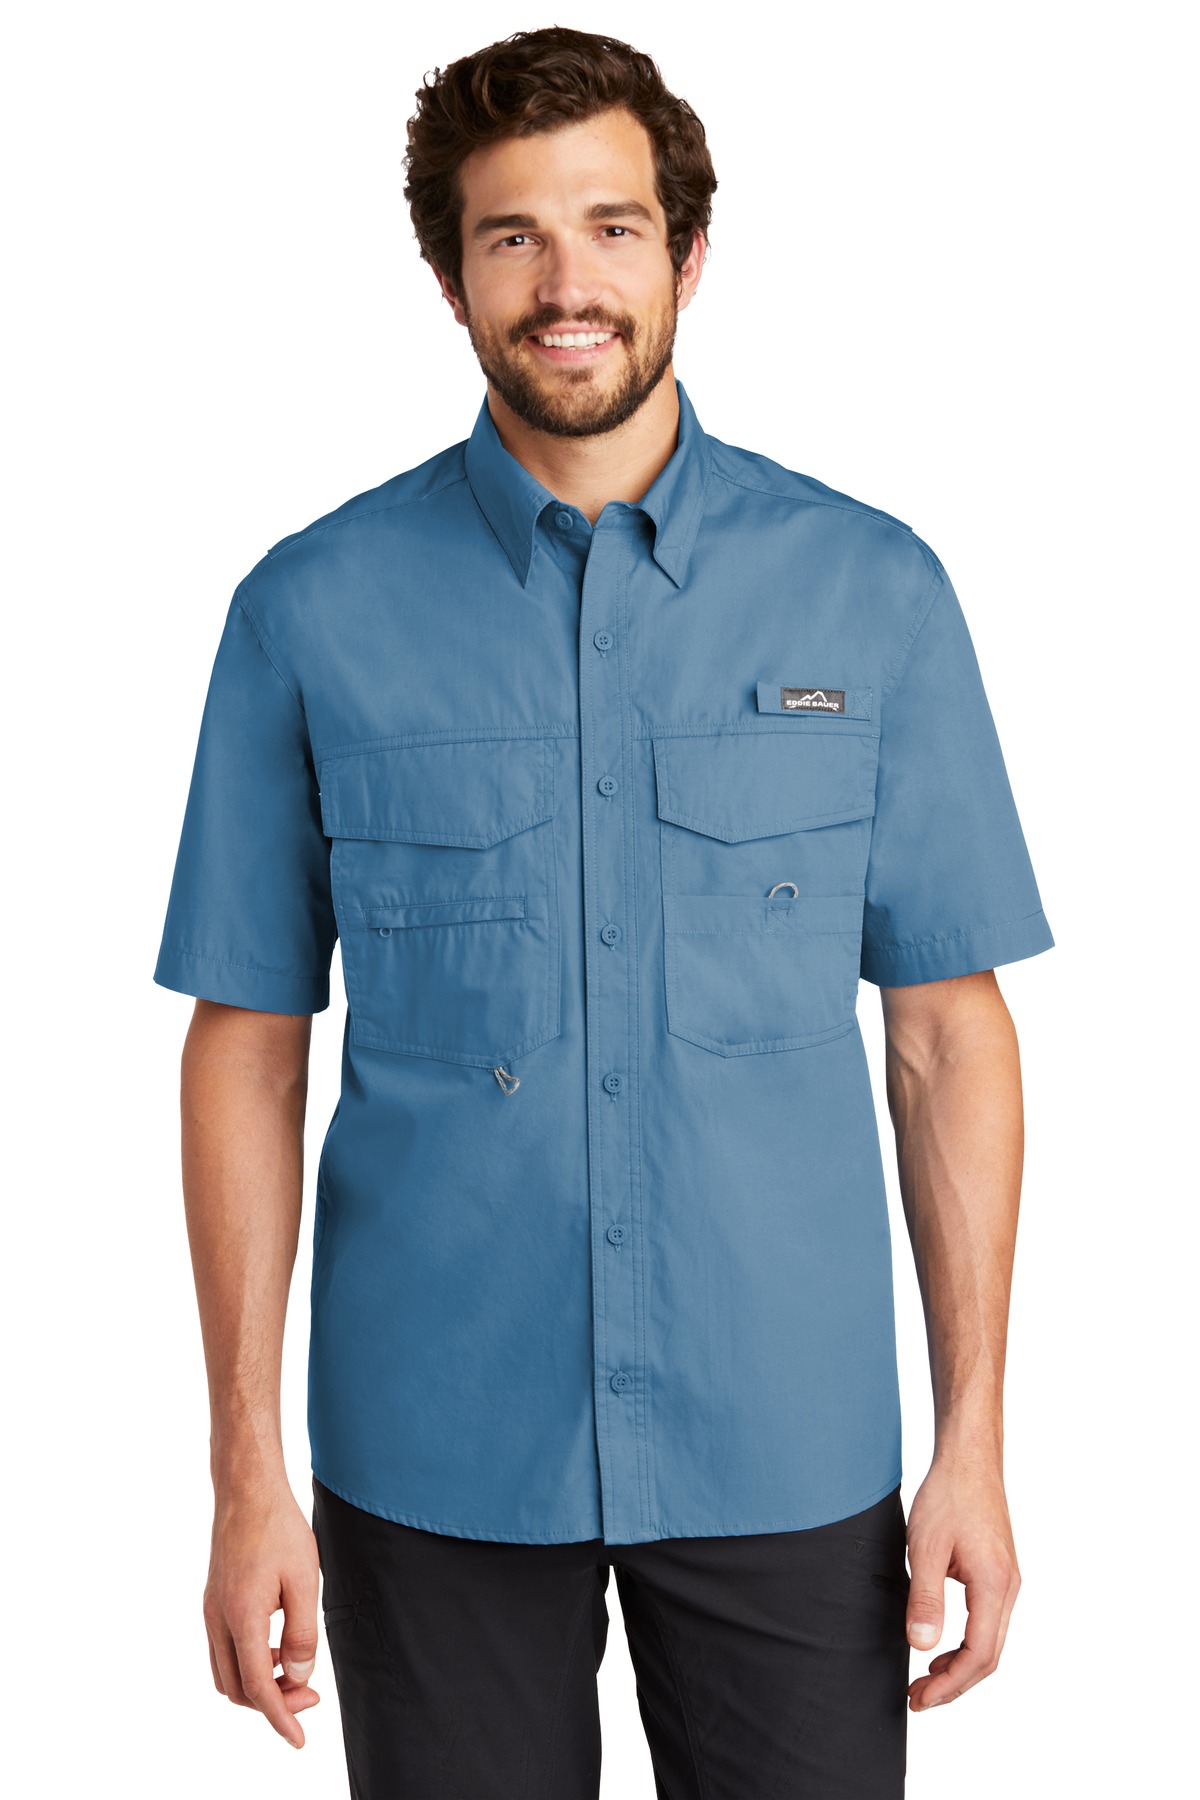 Eddie Bauer – Short Sleeve Fishing Shirt. EB608 | Uniforms Today